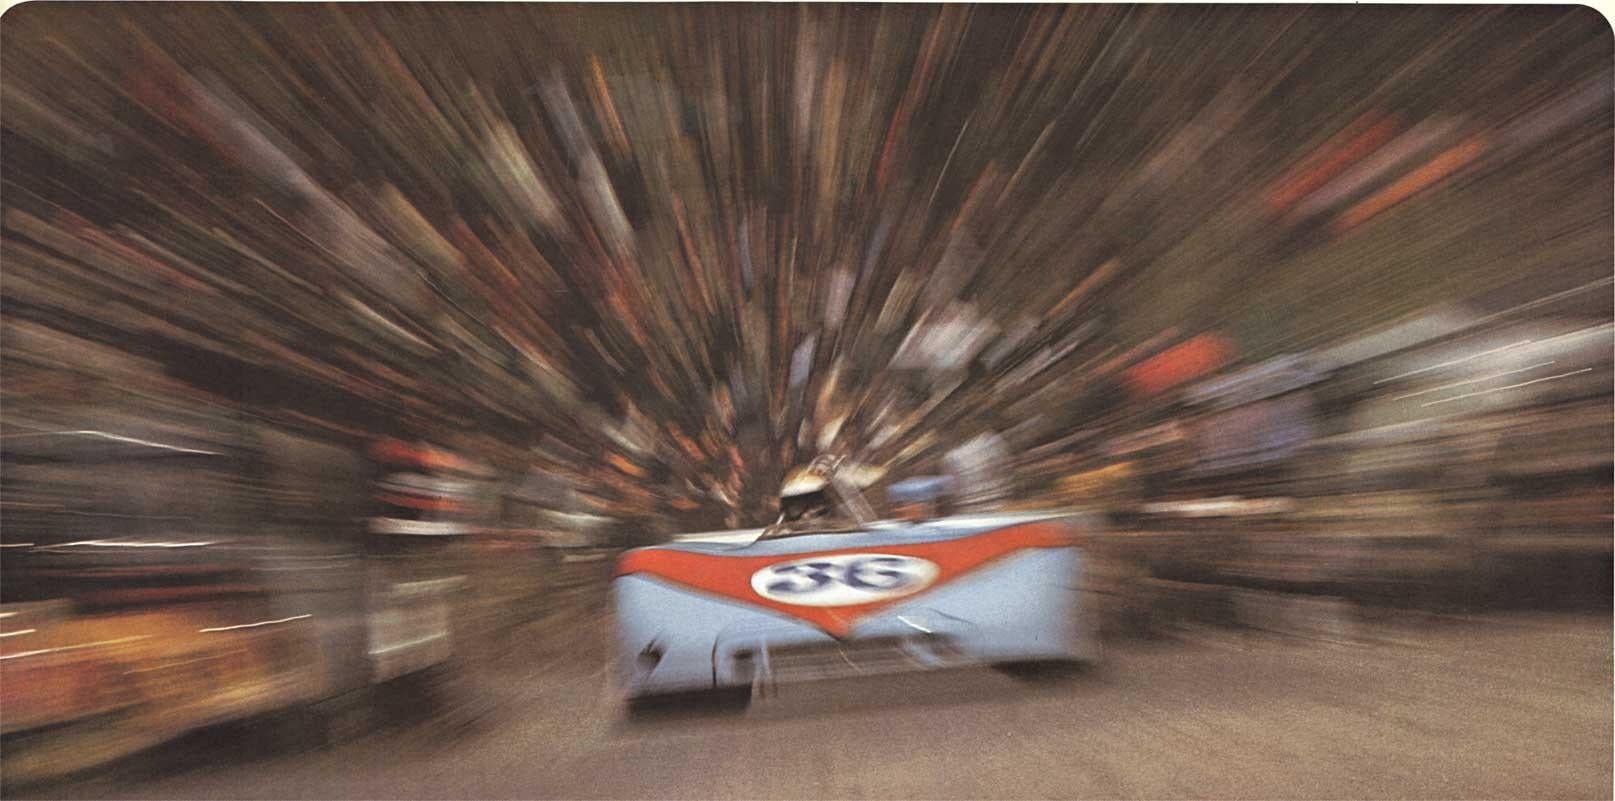 Original Porsche Renn Termine 1971 vintage factory racing poster - Print by Erich Strenger